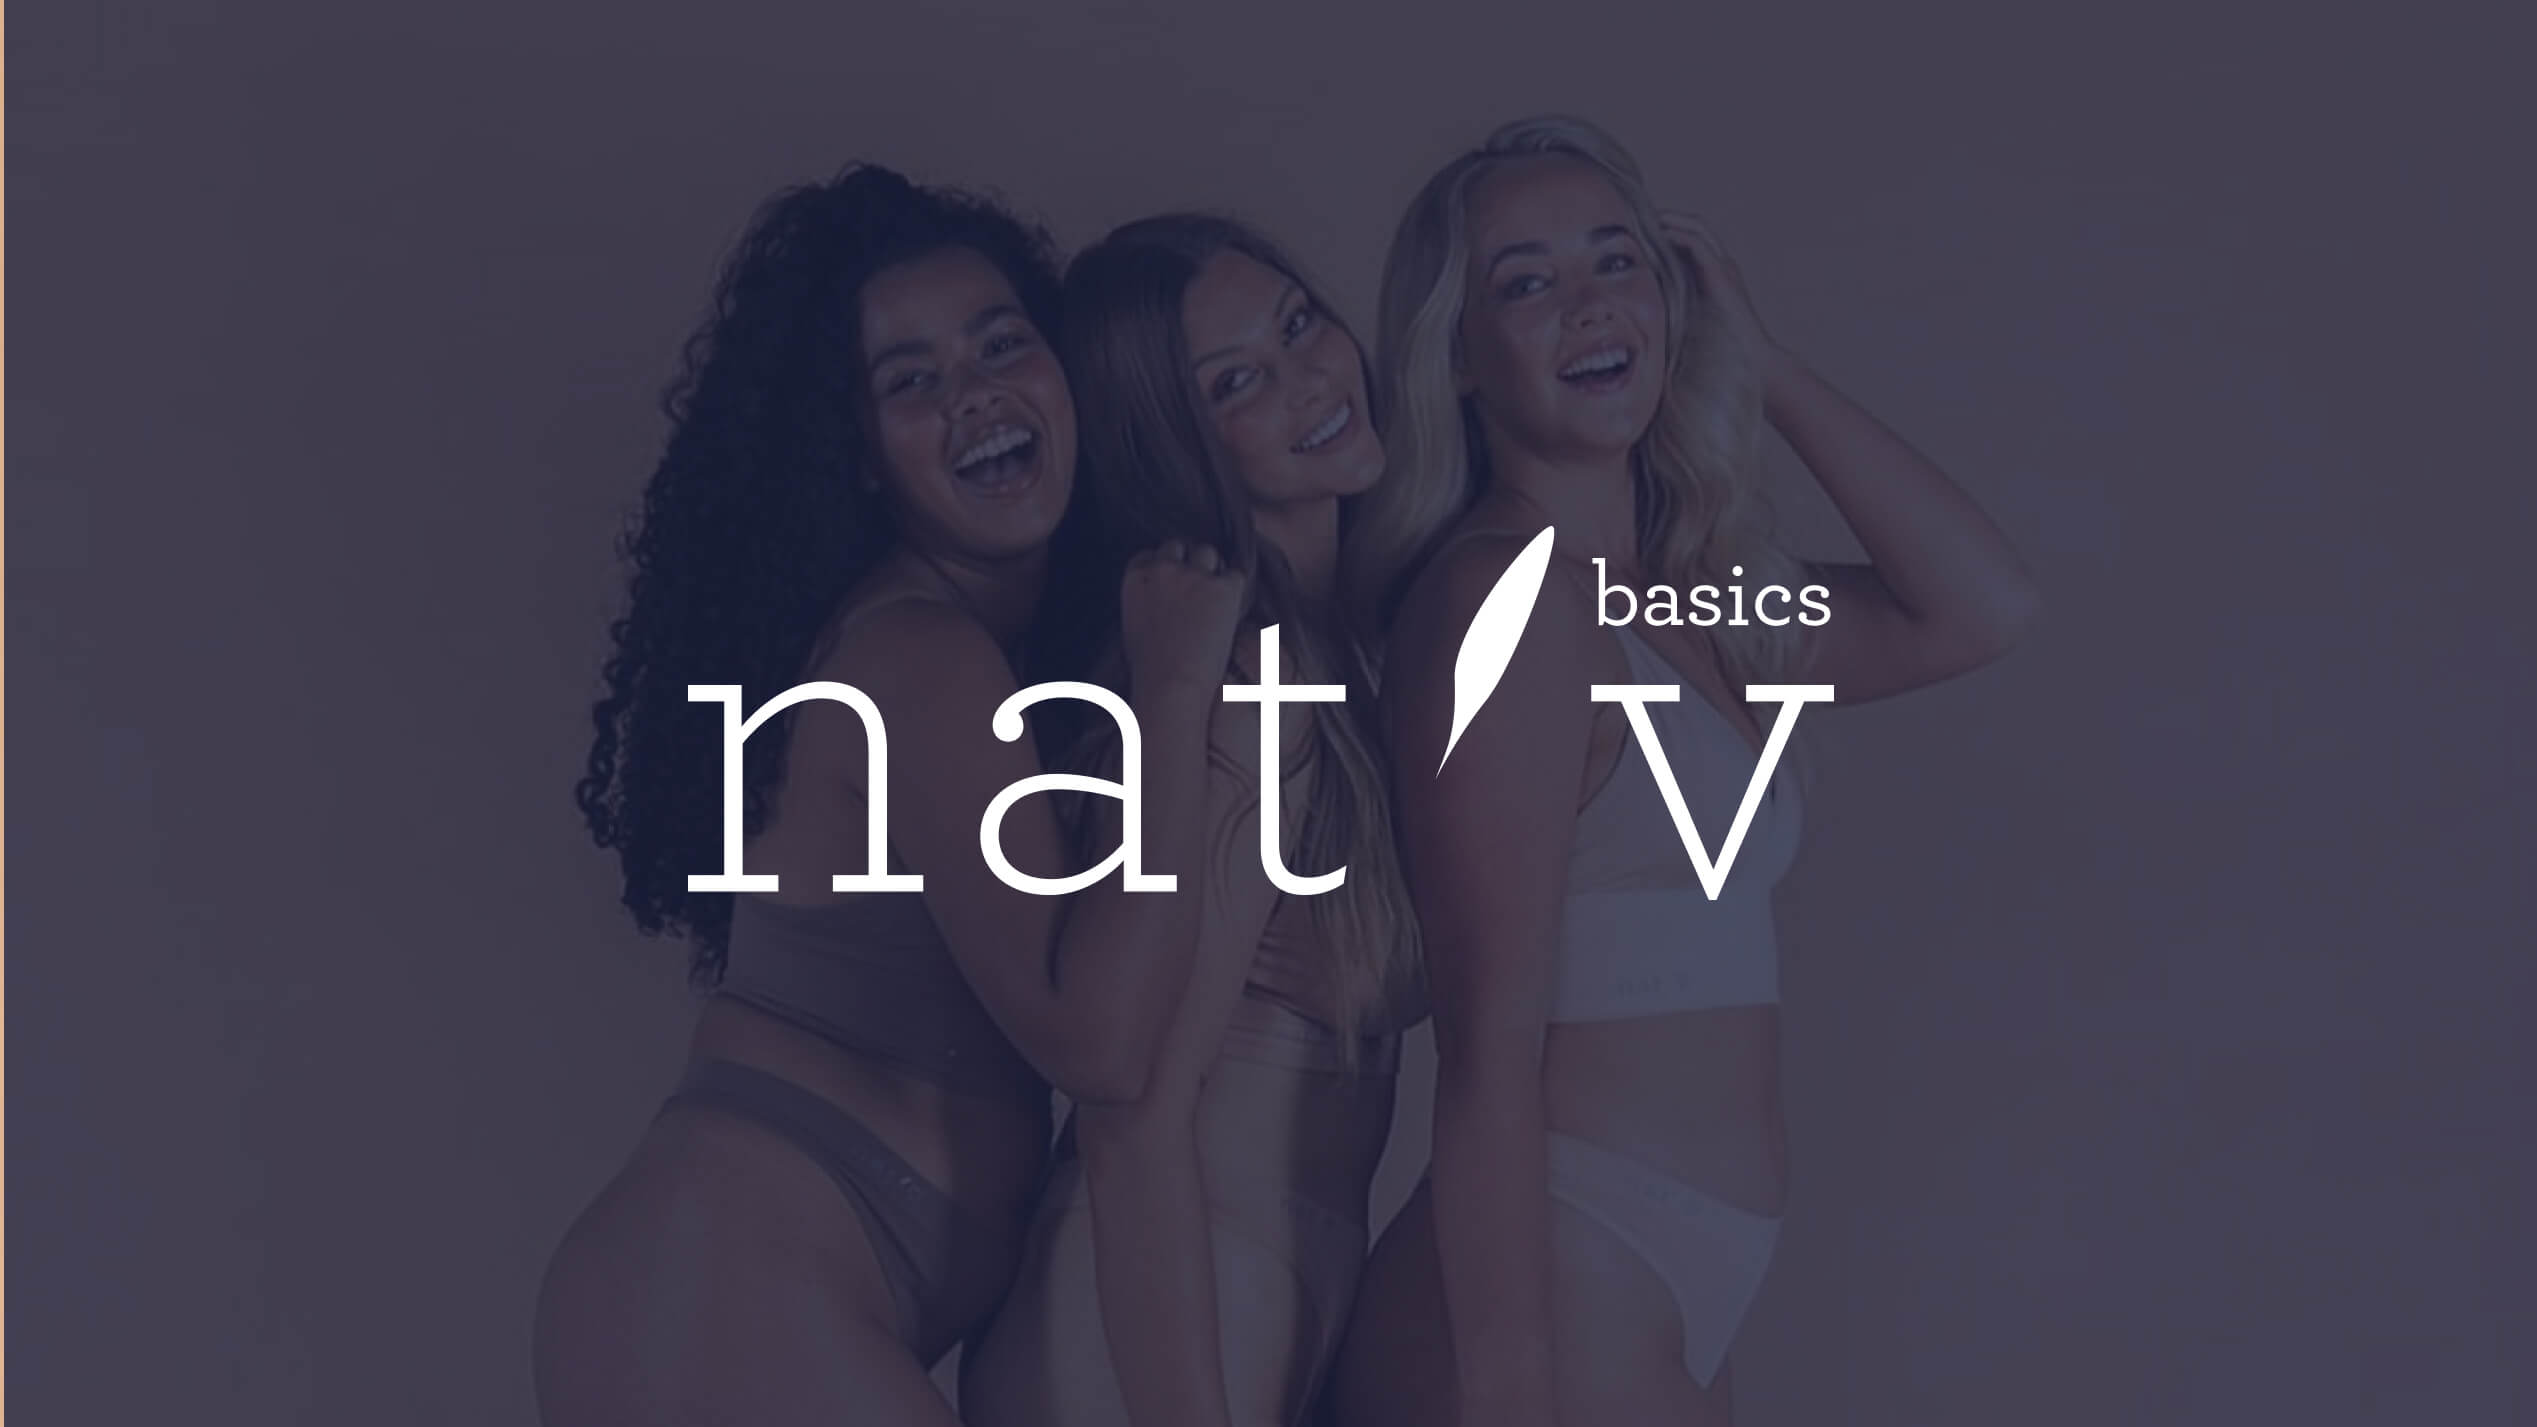 Smiling underwear models posing behind the nat'v logo.